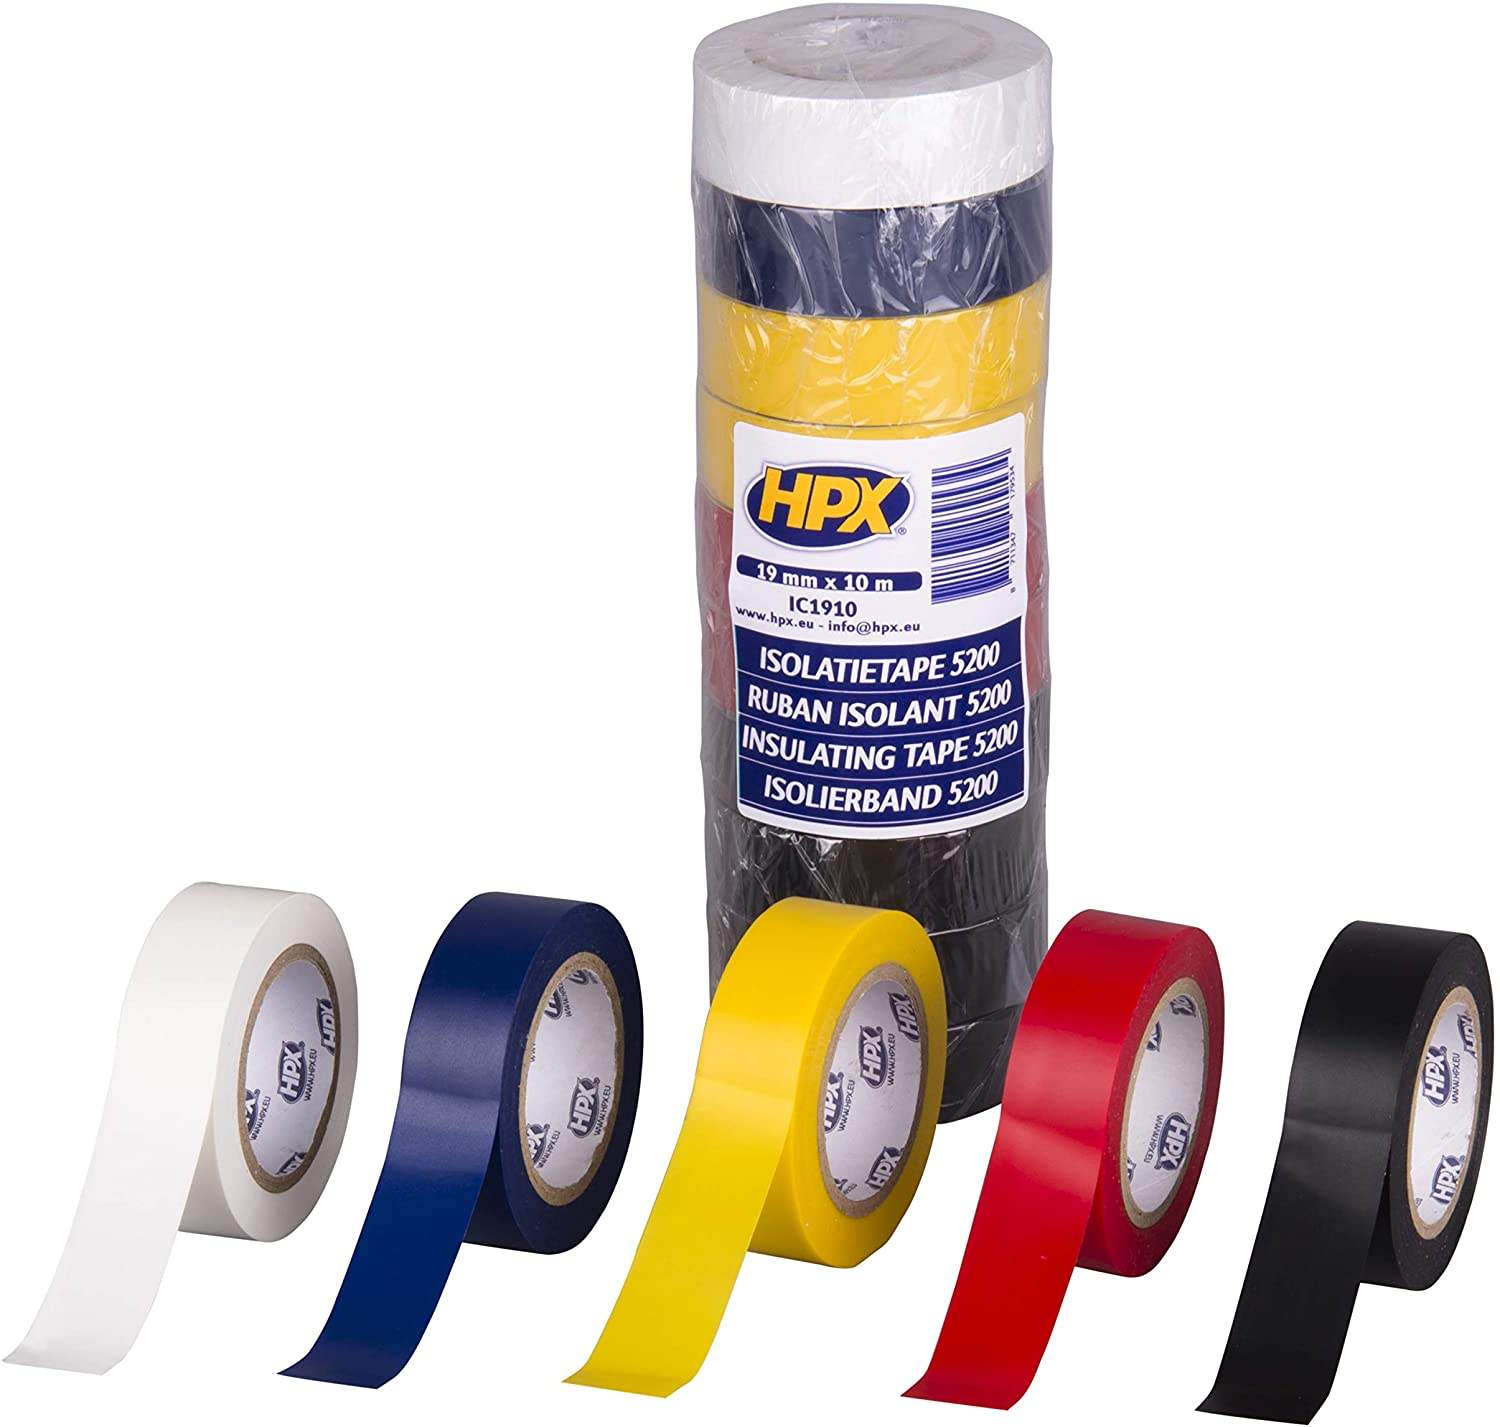 PVC insulation tape TAPE 5200, set of 10, 19mm x 10m